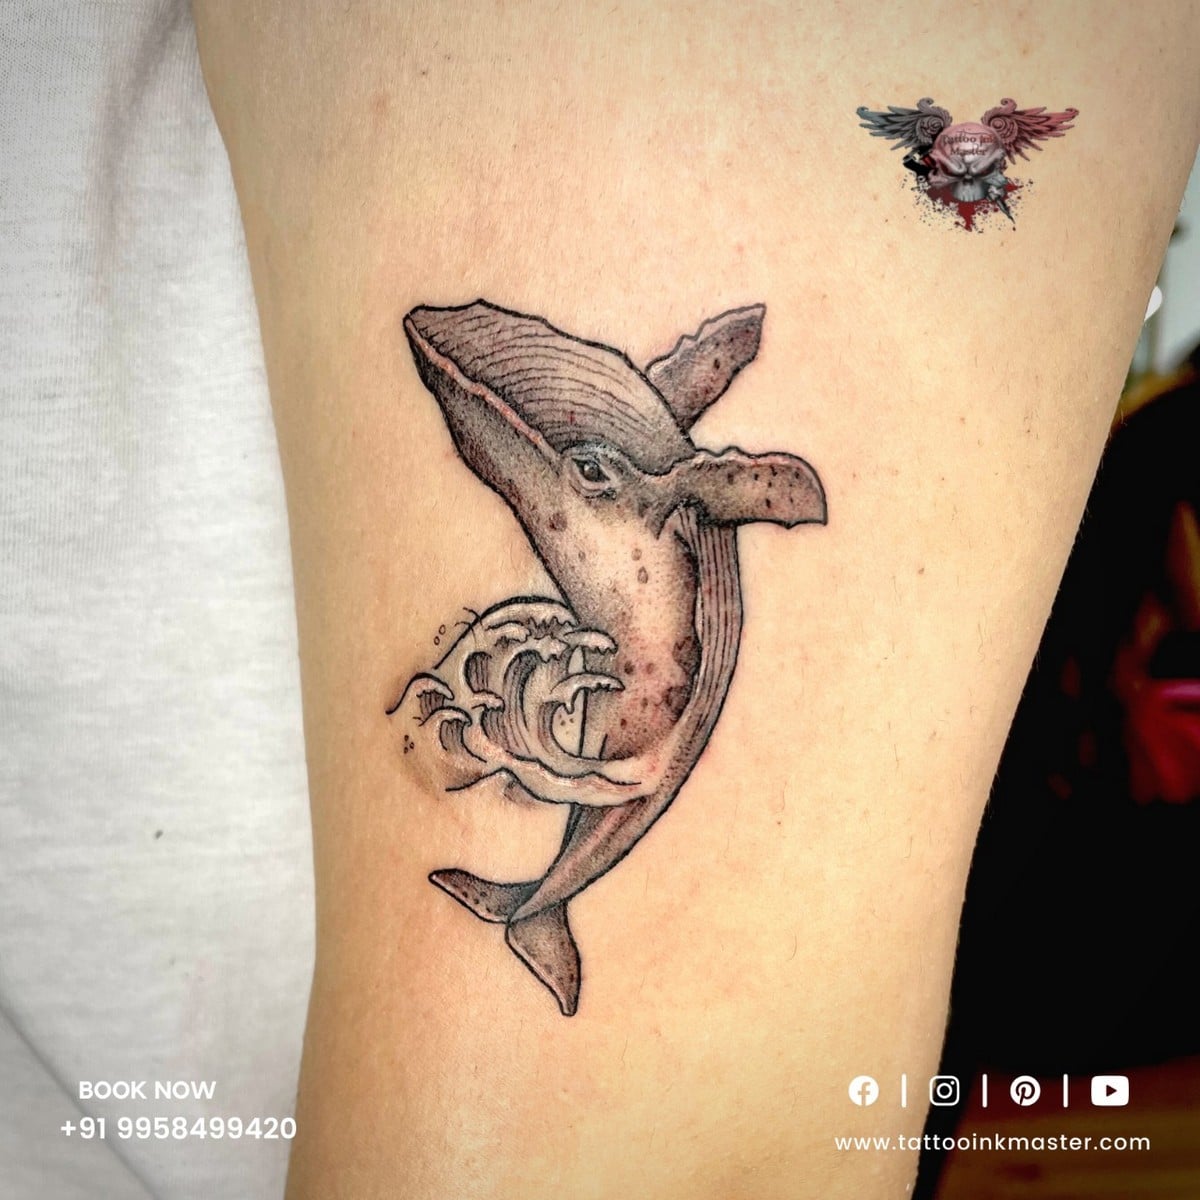 Awesome Fish Tattoo Design | Tattoo Ink Master